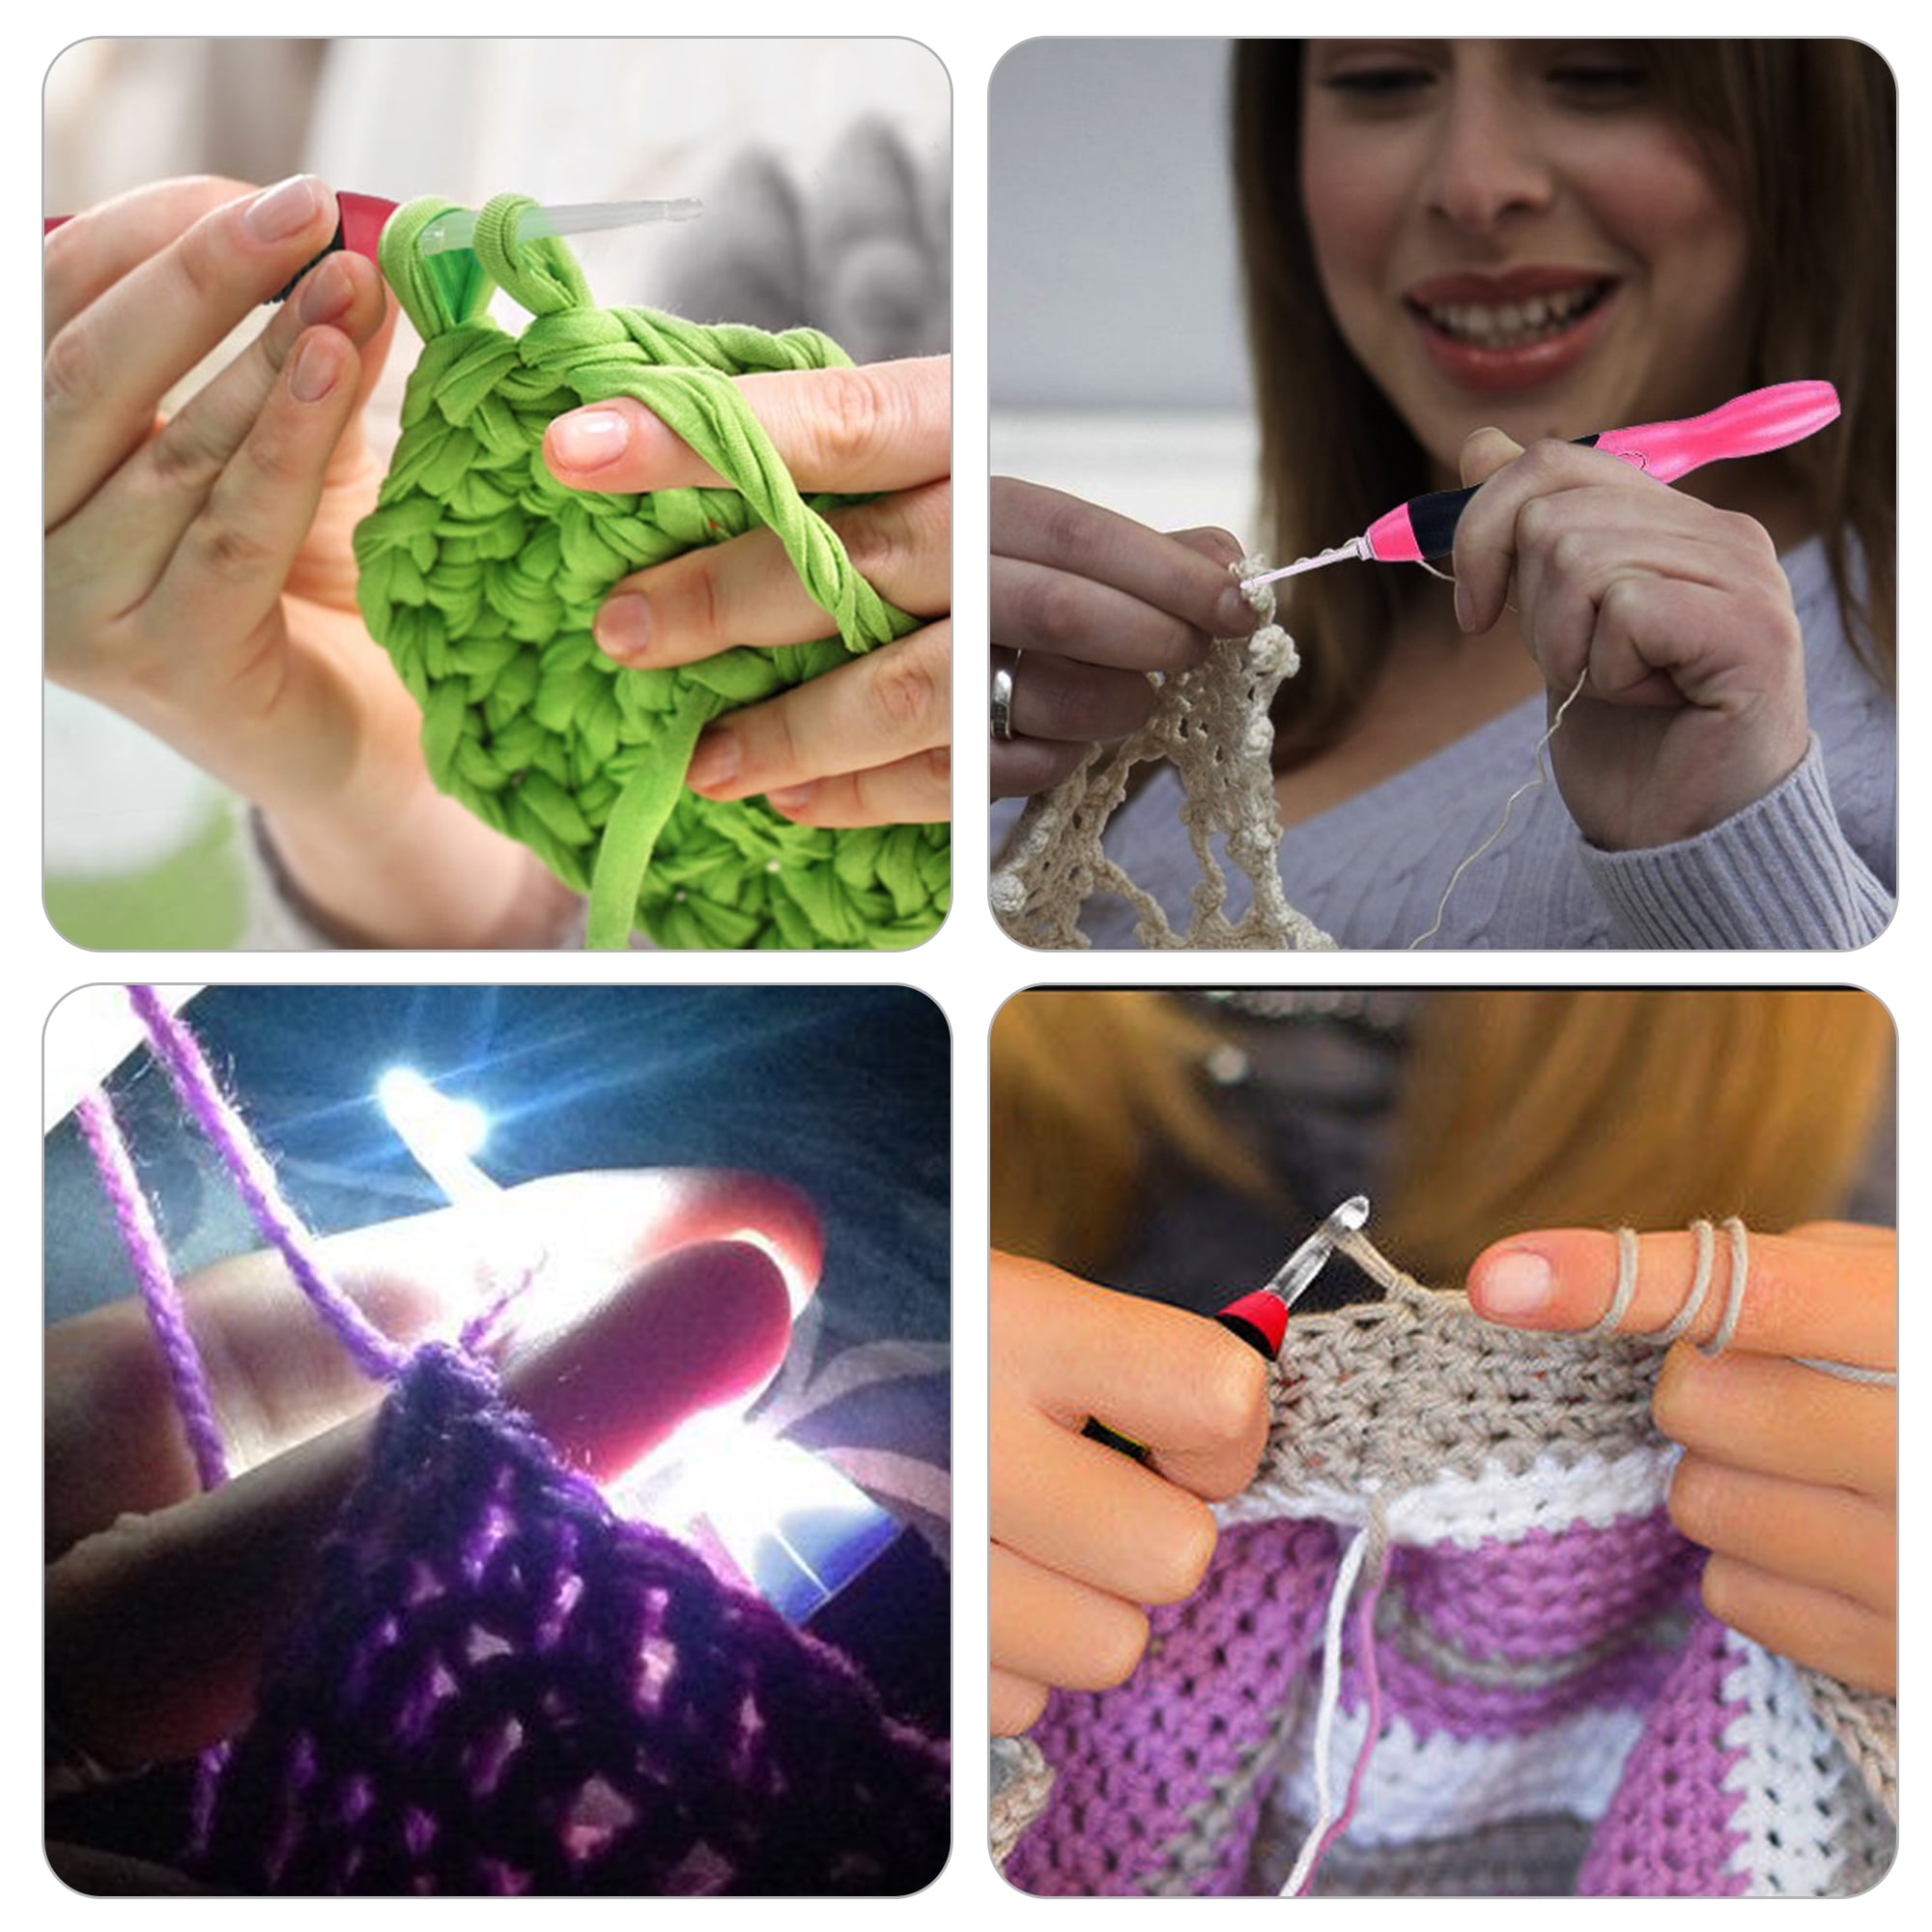 Replaceable Crochet Hook, Nine Replaceable Hook Tips with Built-in Battery  Light up Crochet Hook Set, Interchangeable Crochet Hooks, Accessories